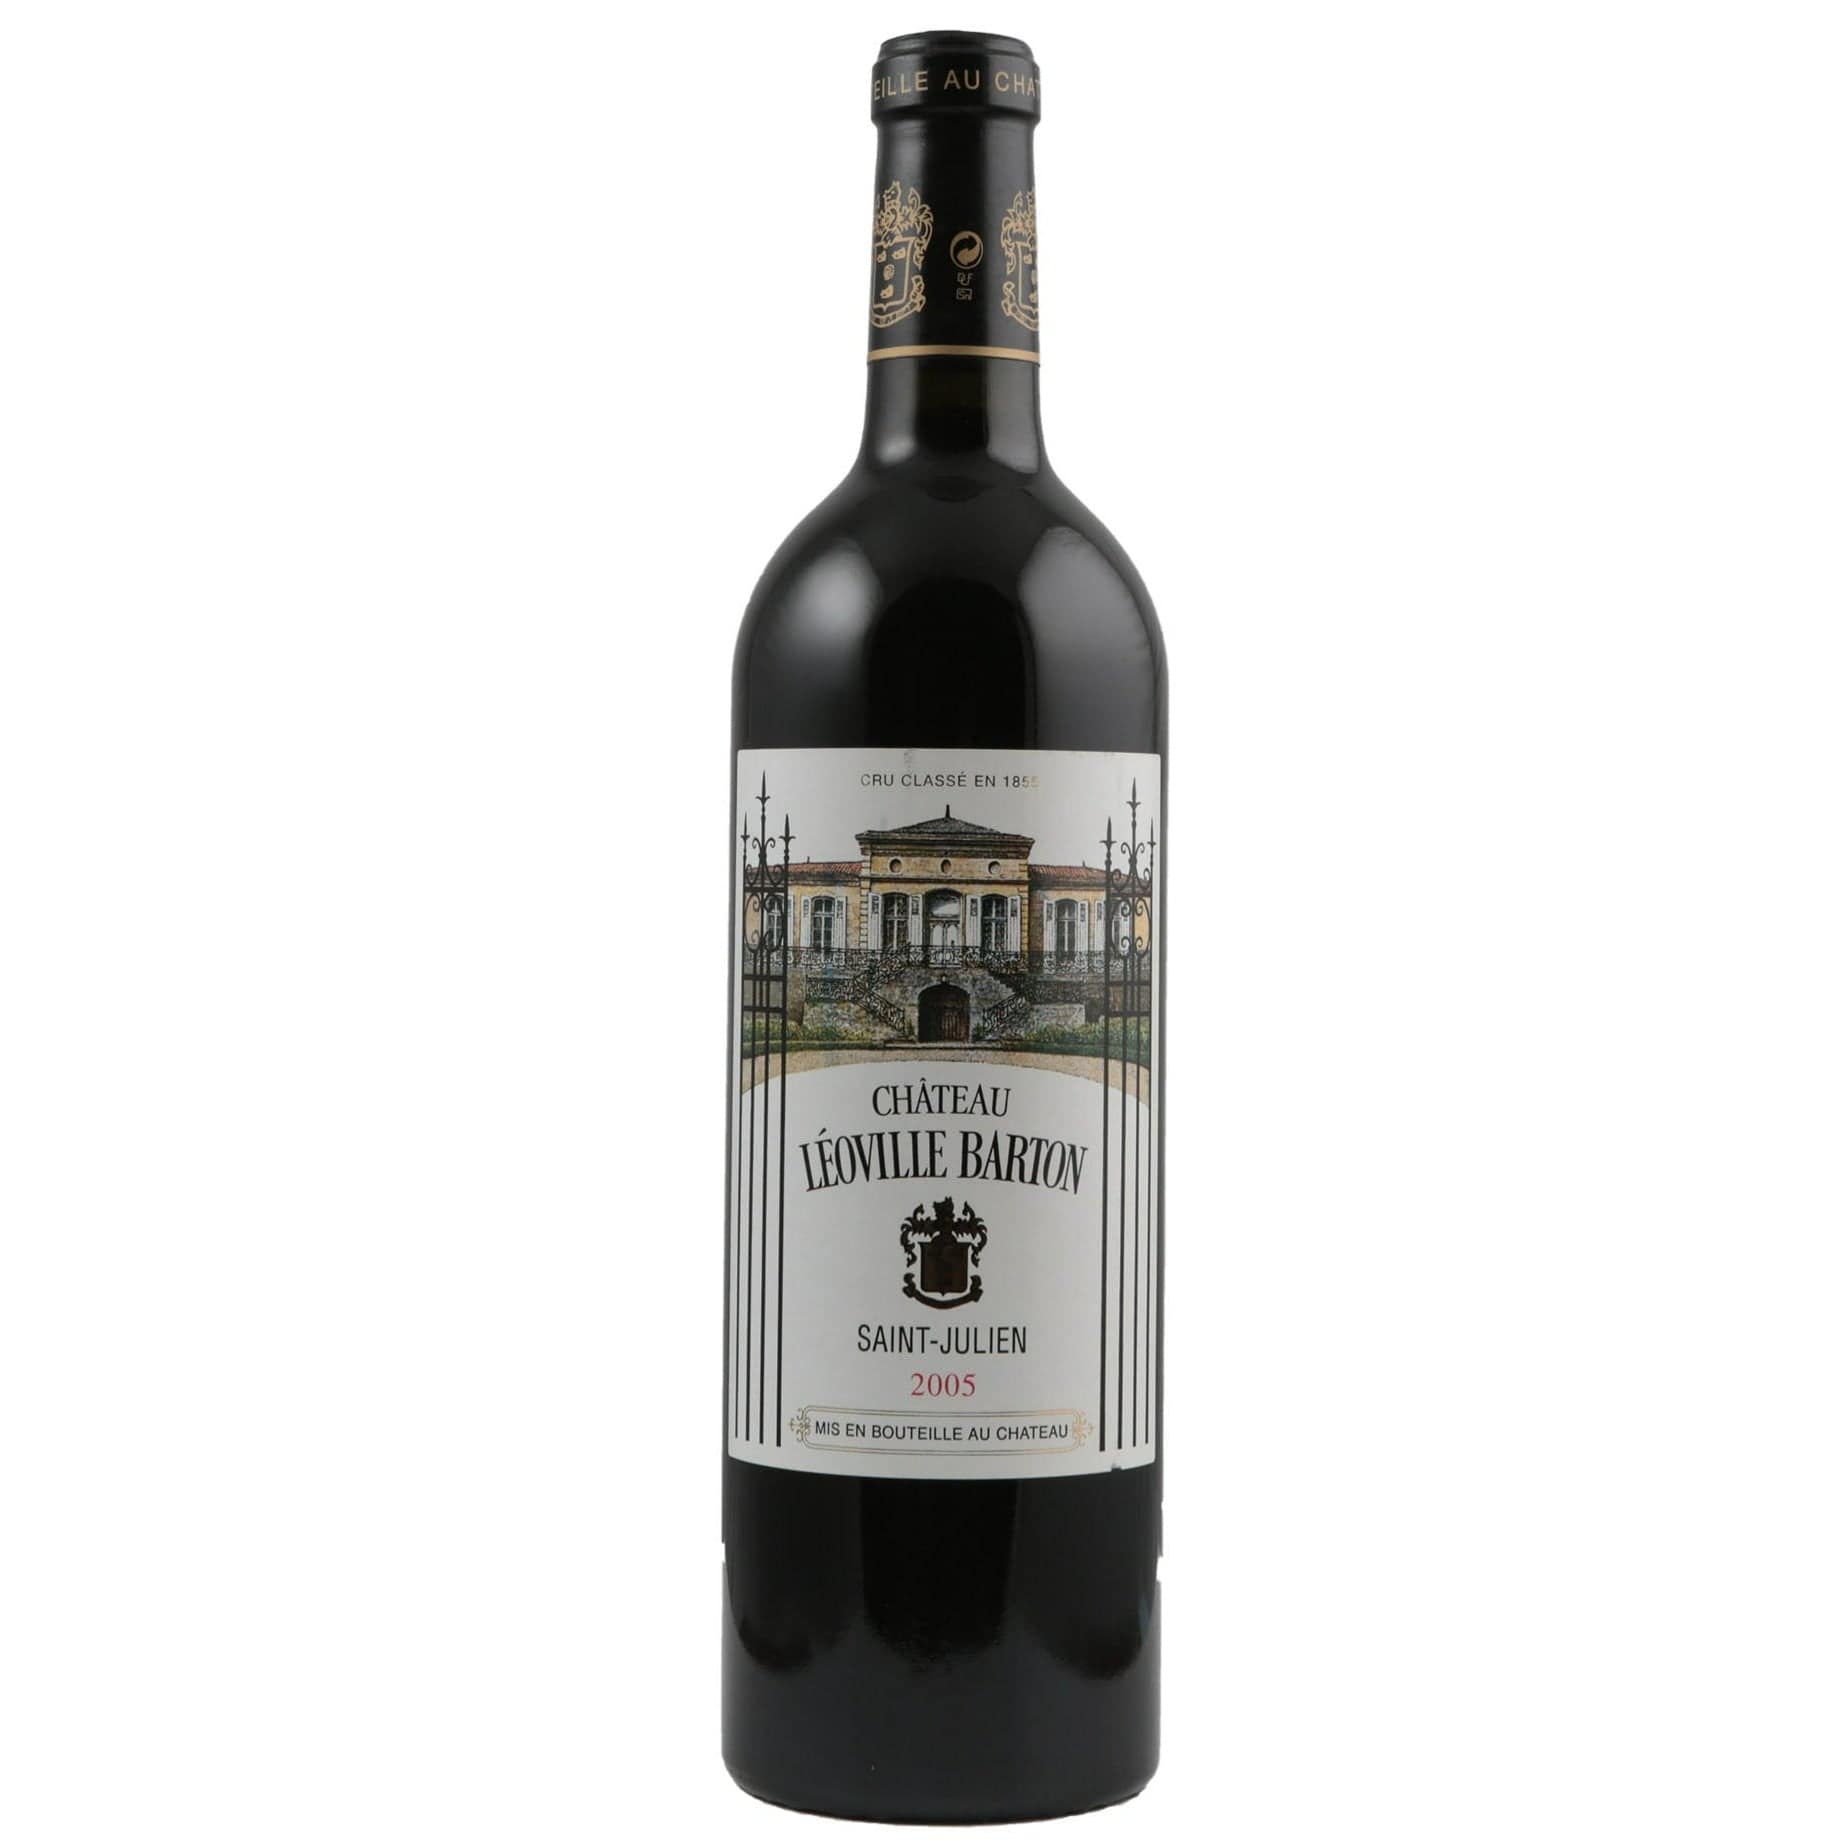 Single bottle of Red wine Ch. Leoville Barton, 2nd Growth Grand Cru Classe, Saint-Julien, 2005 73% Cabernet Sauvignon, 26% Merlot & 1% Cabernet Franc